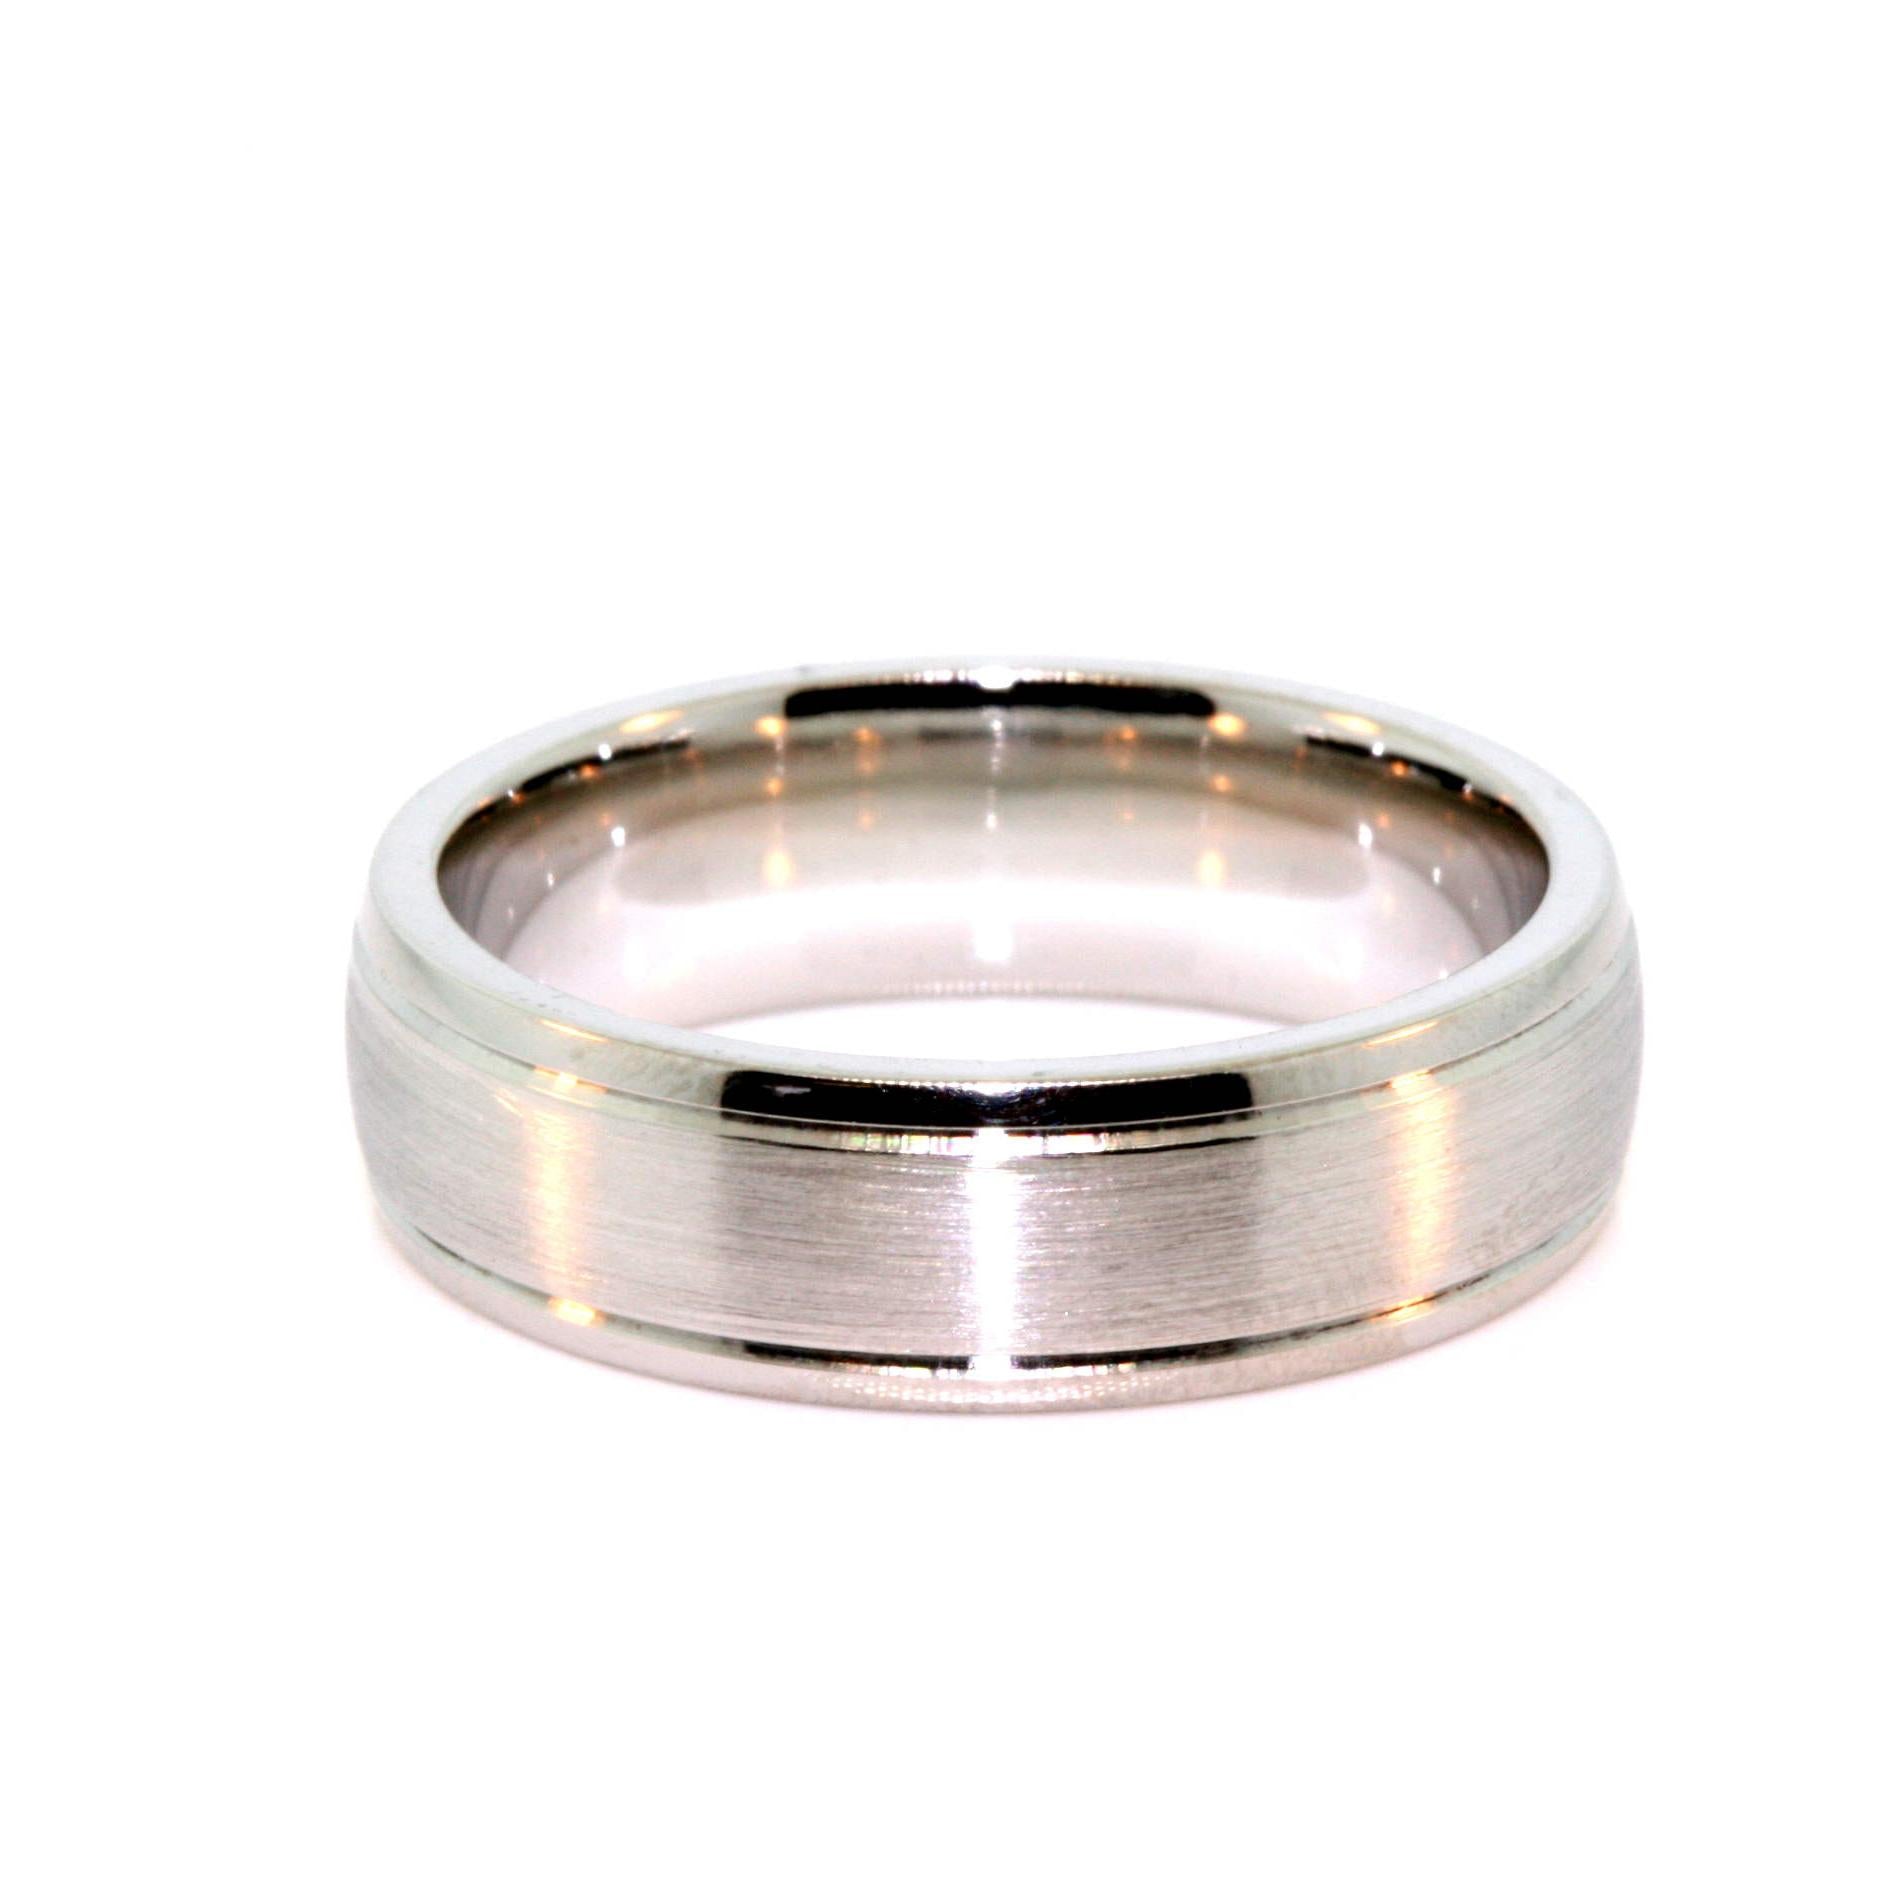 3 Stone Diamond Mens Wedding Ring in 18k Gold Comfort Fit Ring